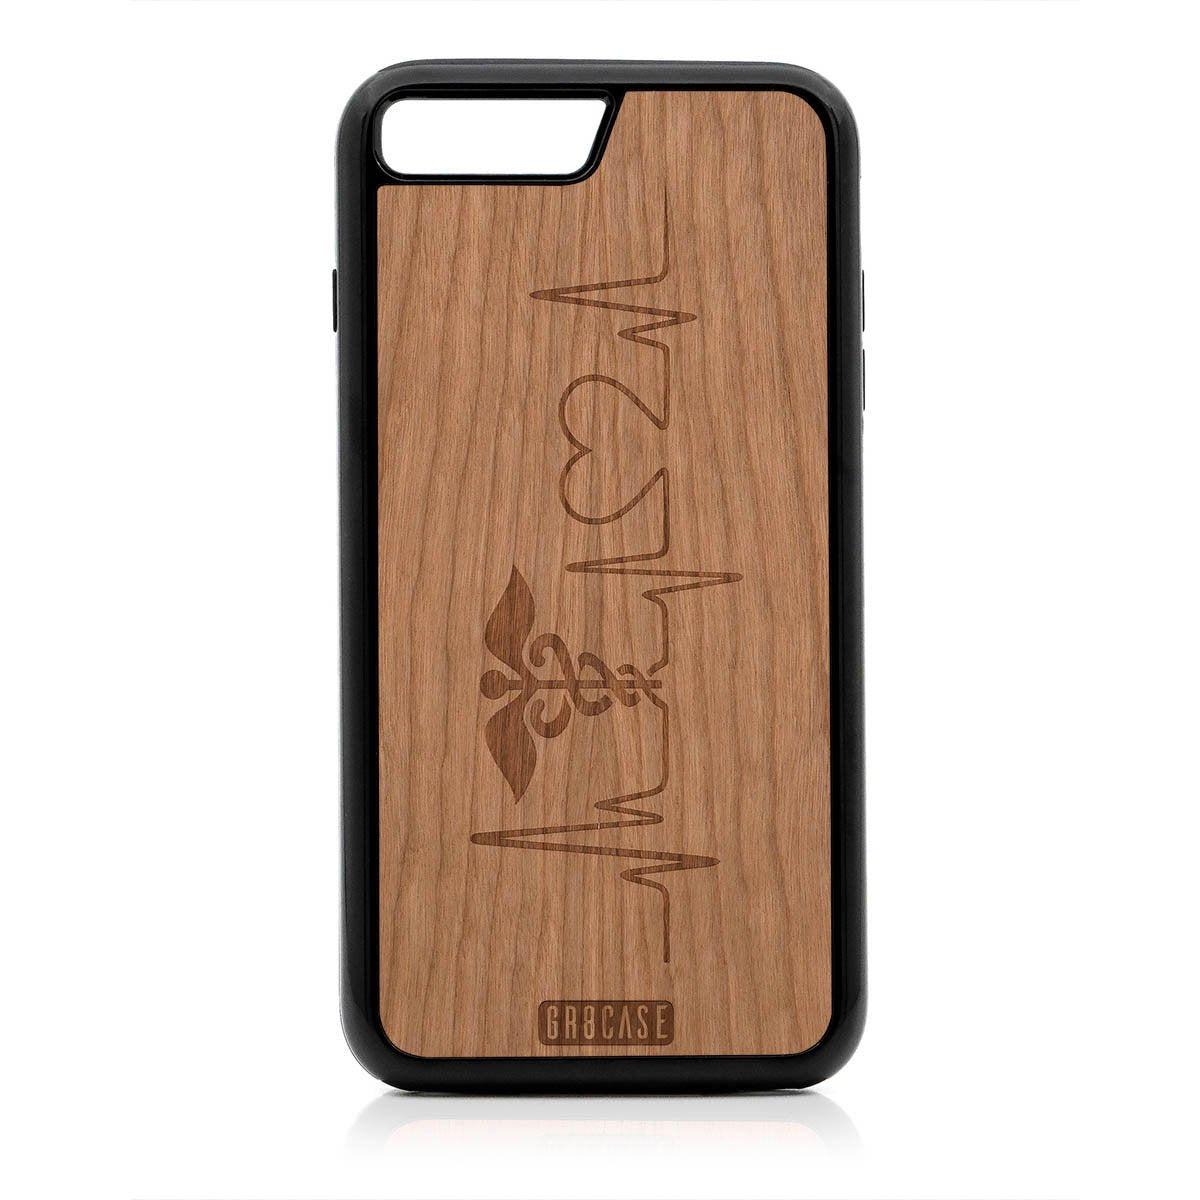 Hero's Heart (Nurse, Doctor) Design Wood Case For iPhone 7 Plus / 8 Plus by GR8CASE